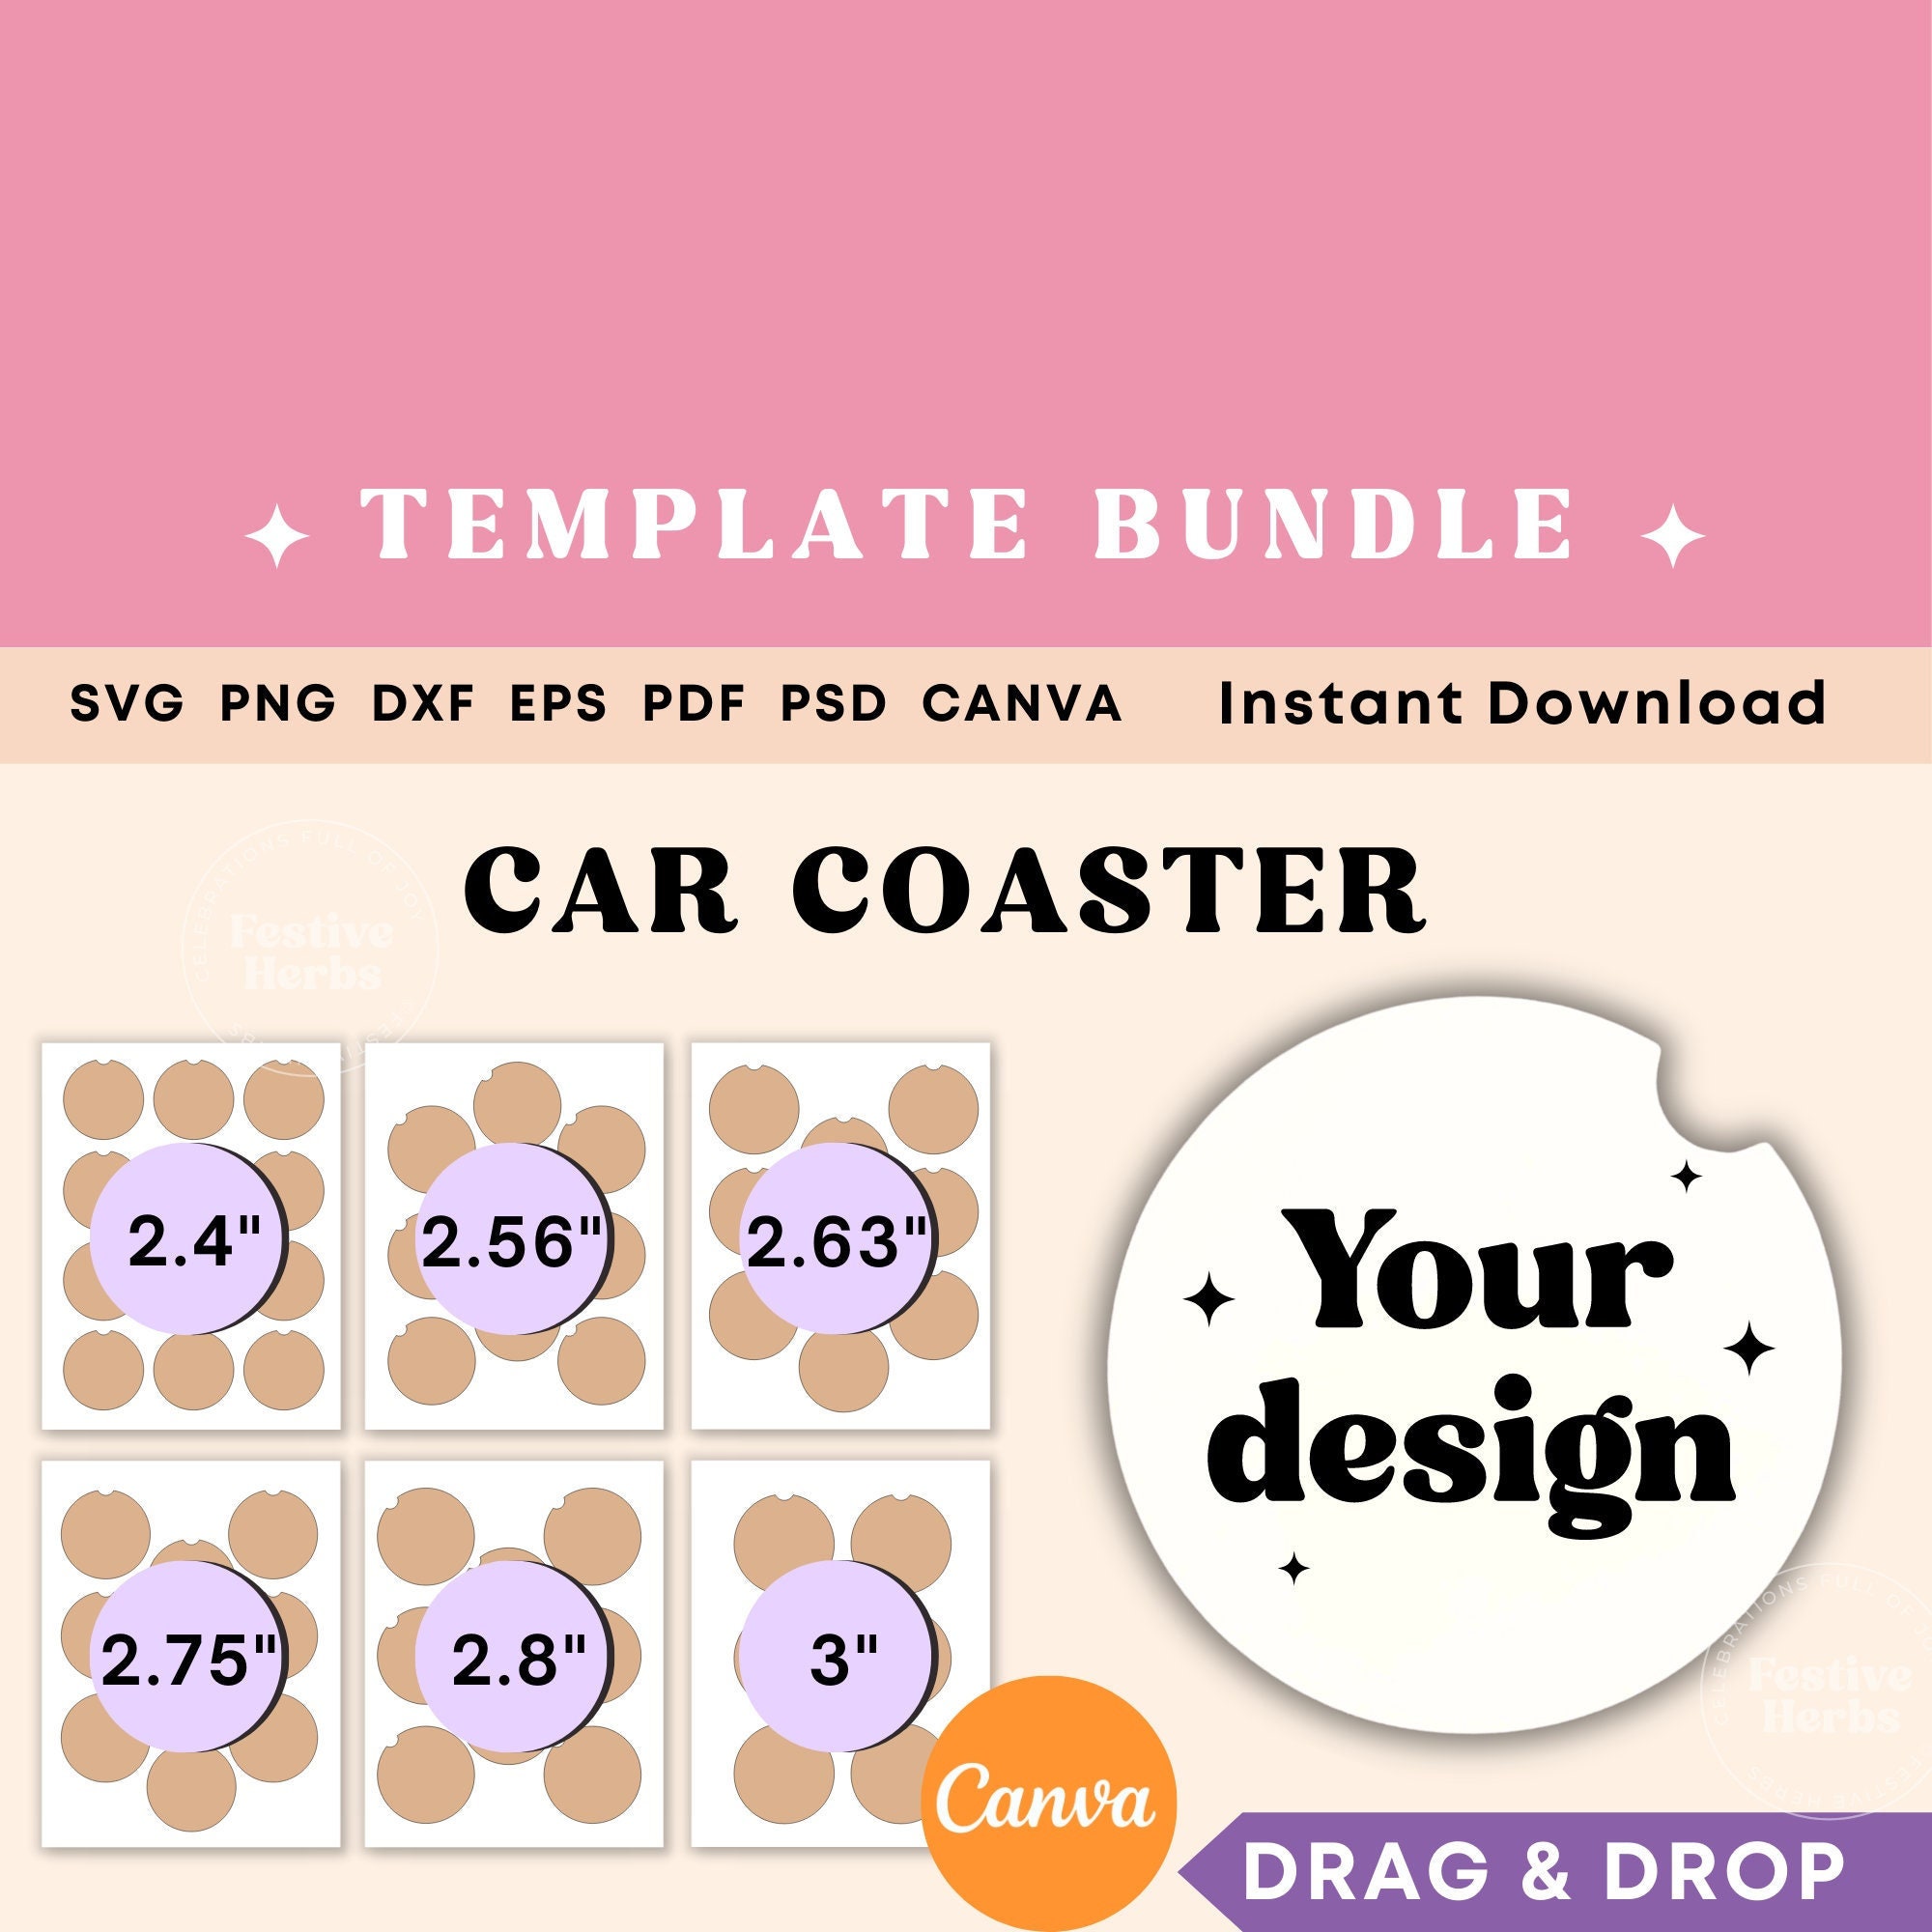 Sublimation Neoprene Fabric Car Coaster